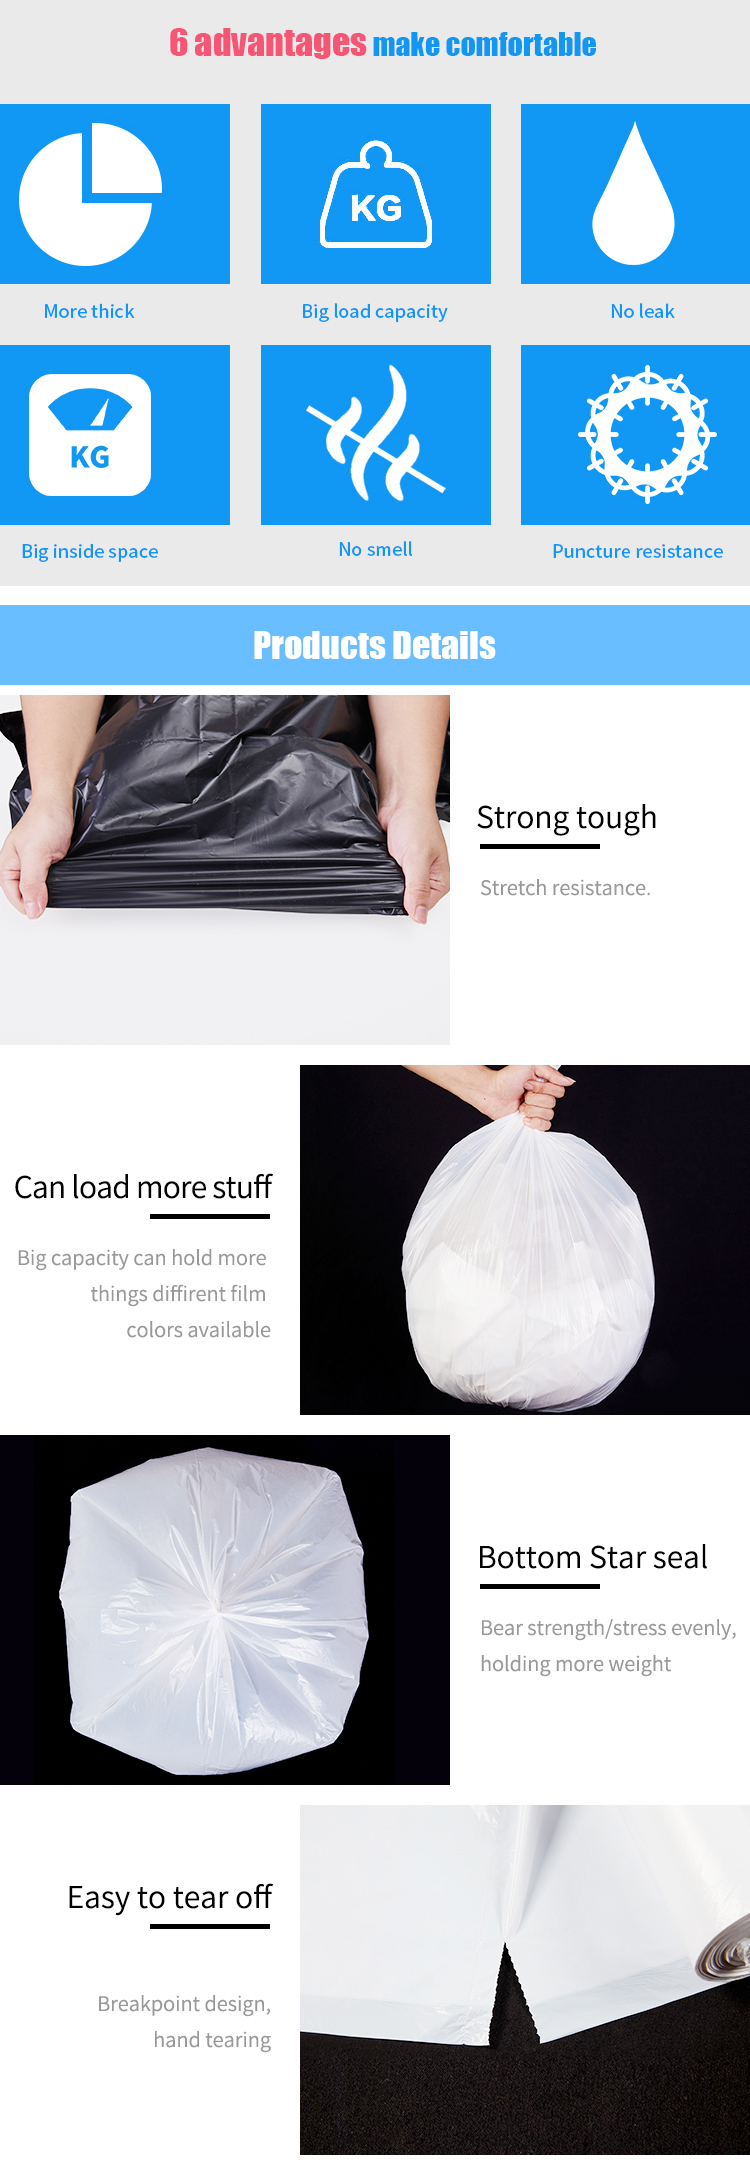 Wholesale roll biodegradable plastic garbage bag custom thickness black green pe trash bag